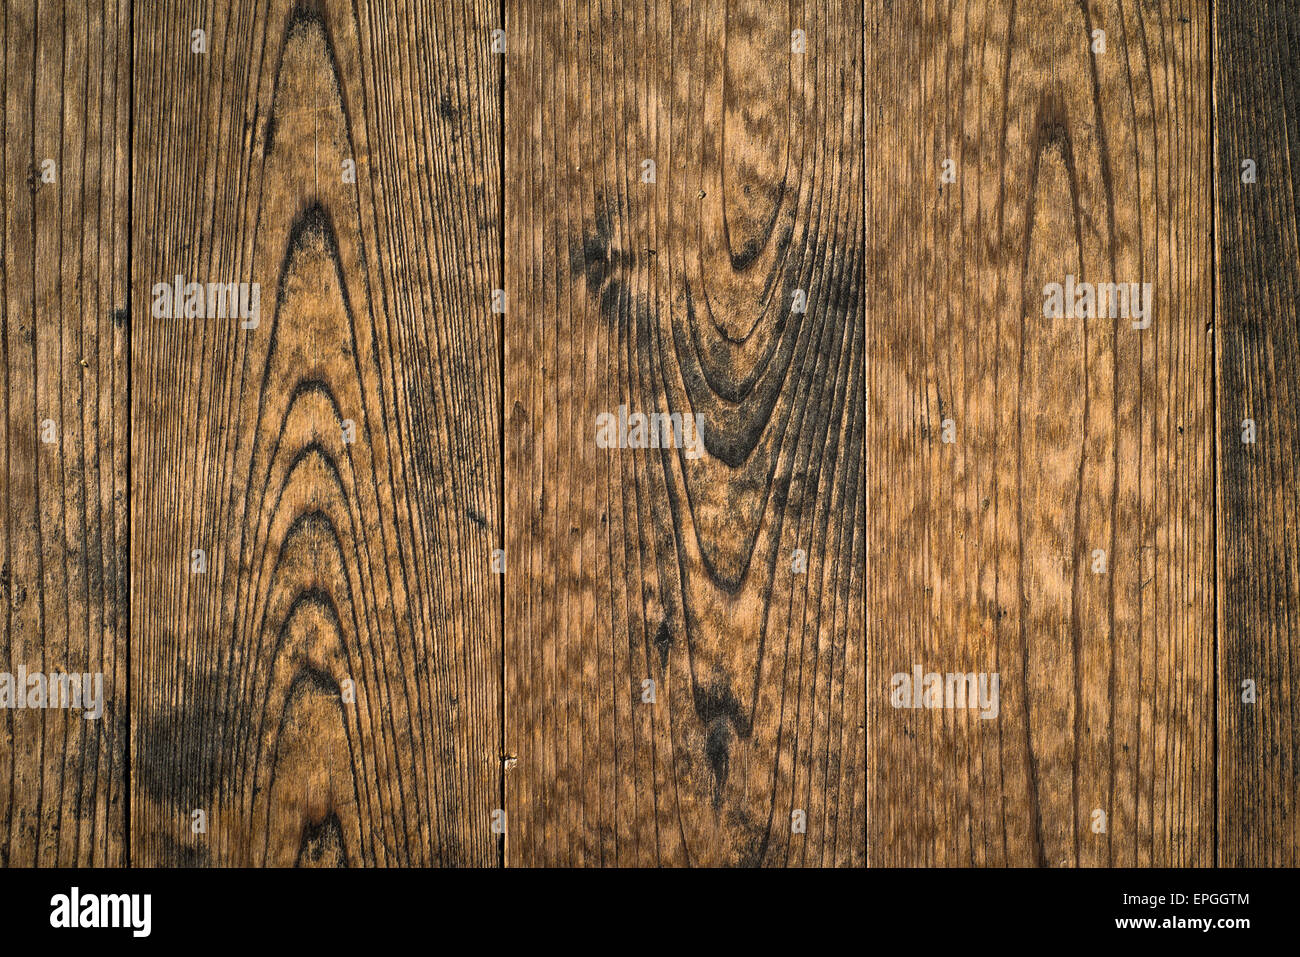 Grunge wooden background Stock Photo